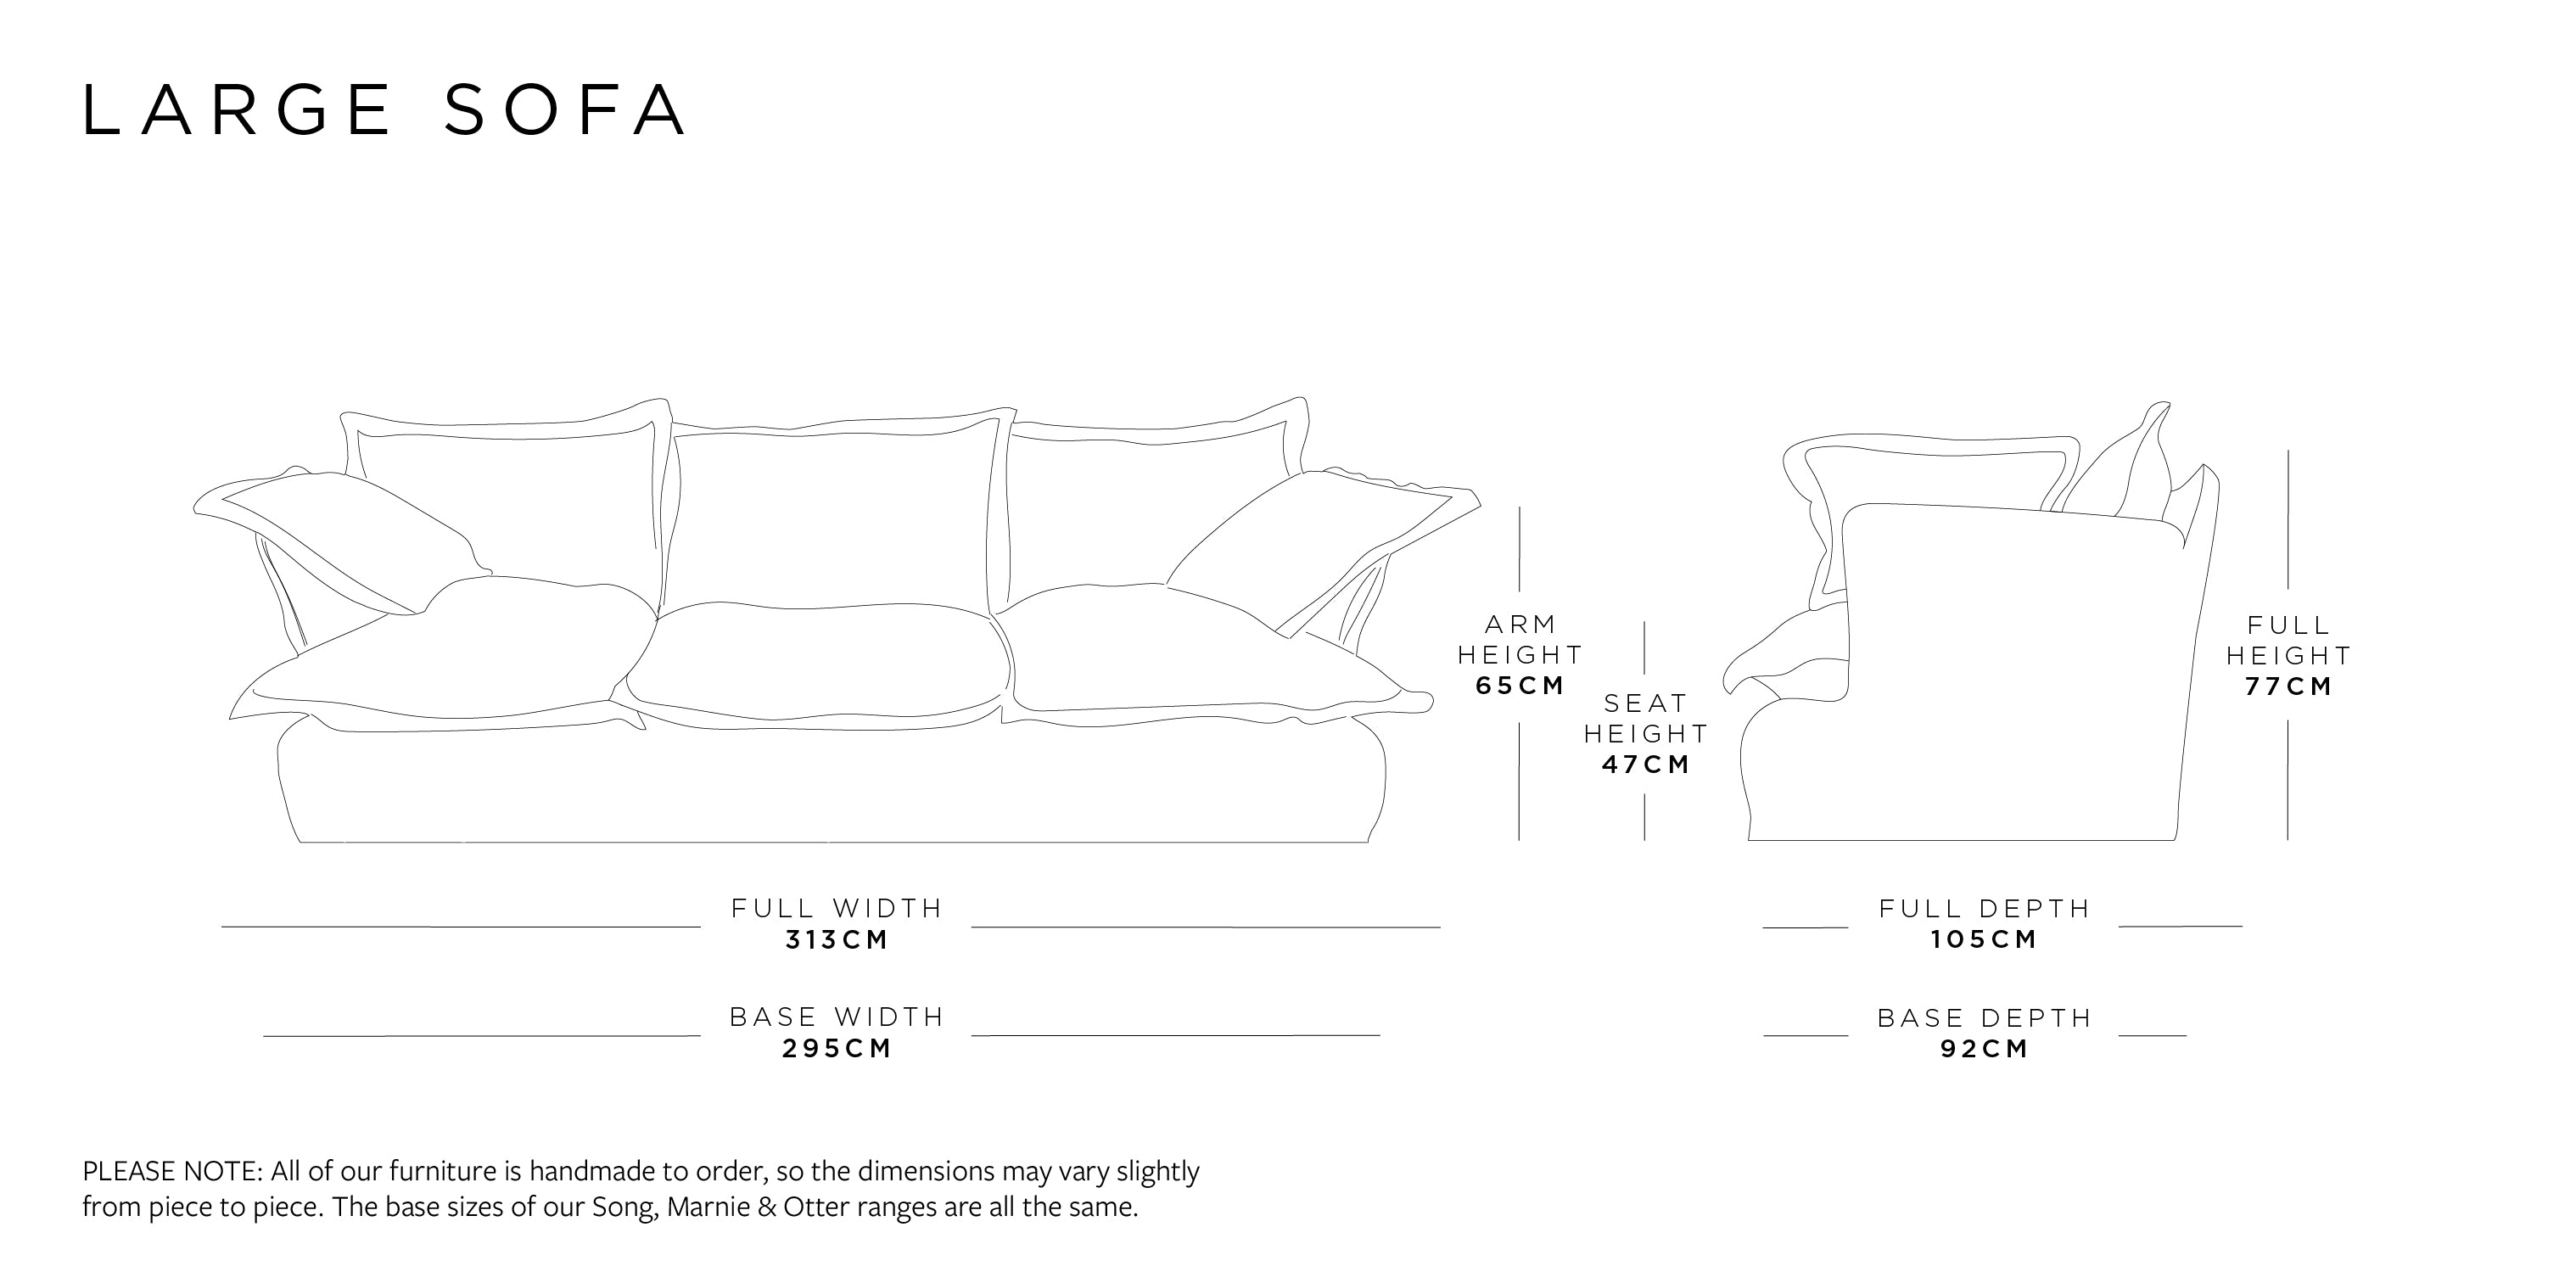 Large Sofa | Marnie Range Size Guide